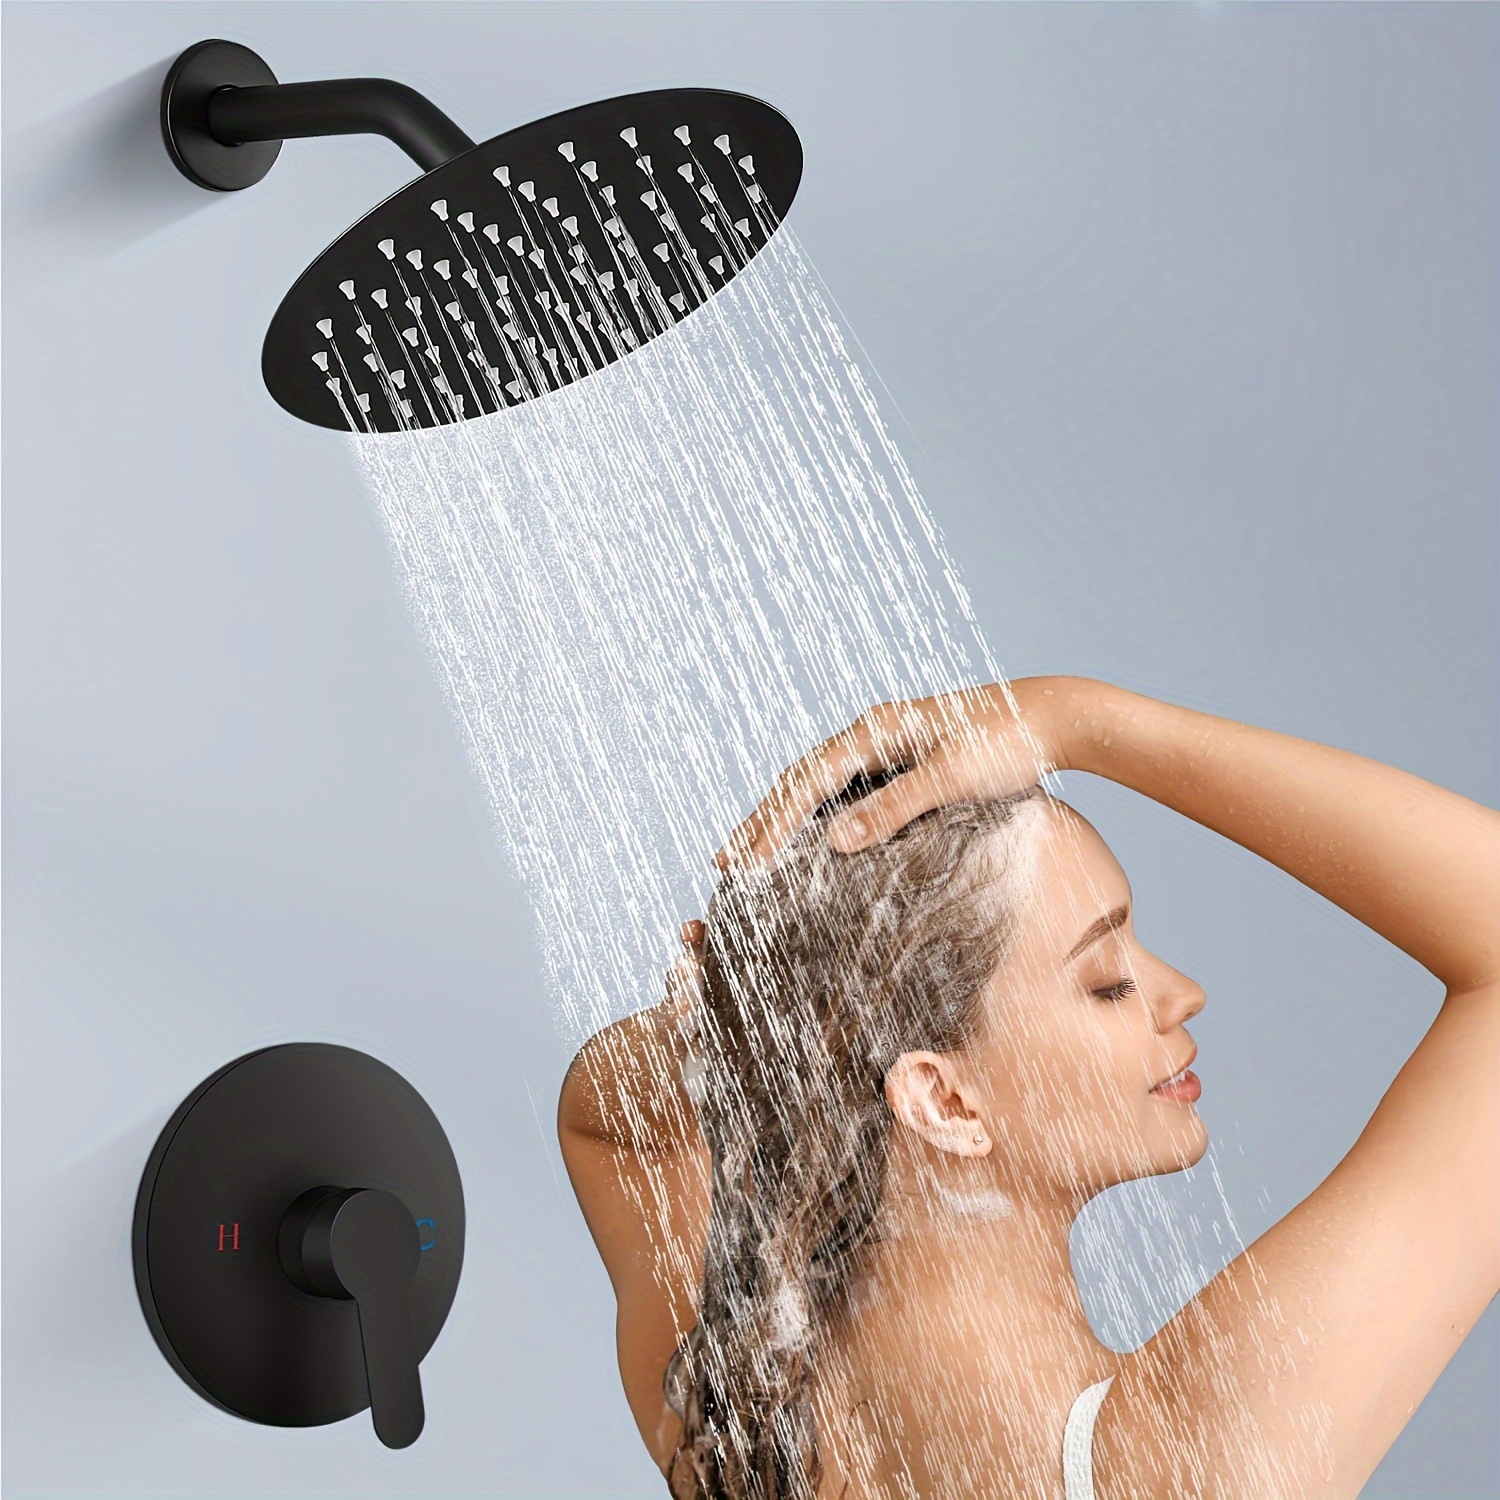  Sistema de ducha negro mate con barra deslizante, cabezal de  ducha de lluvia redondo de latón con ducha de mano de 3 vías, juego de grifo  mezclador de ducha montado en